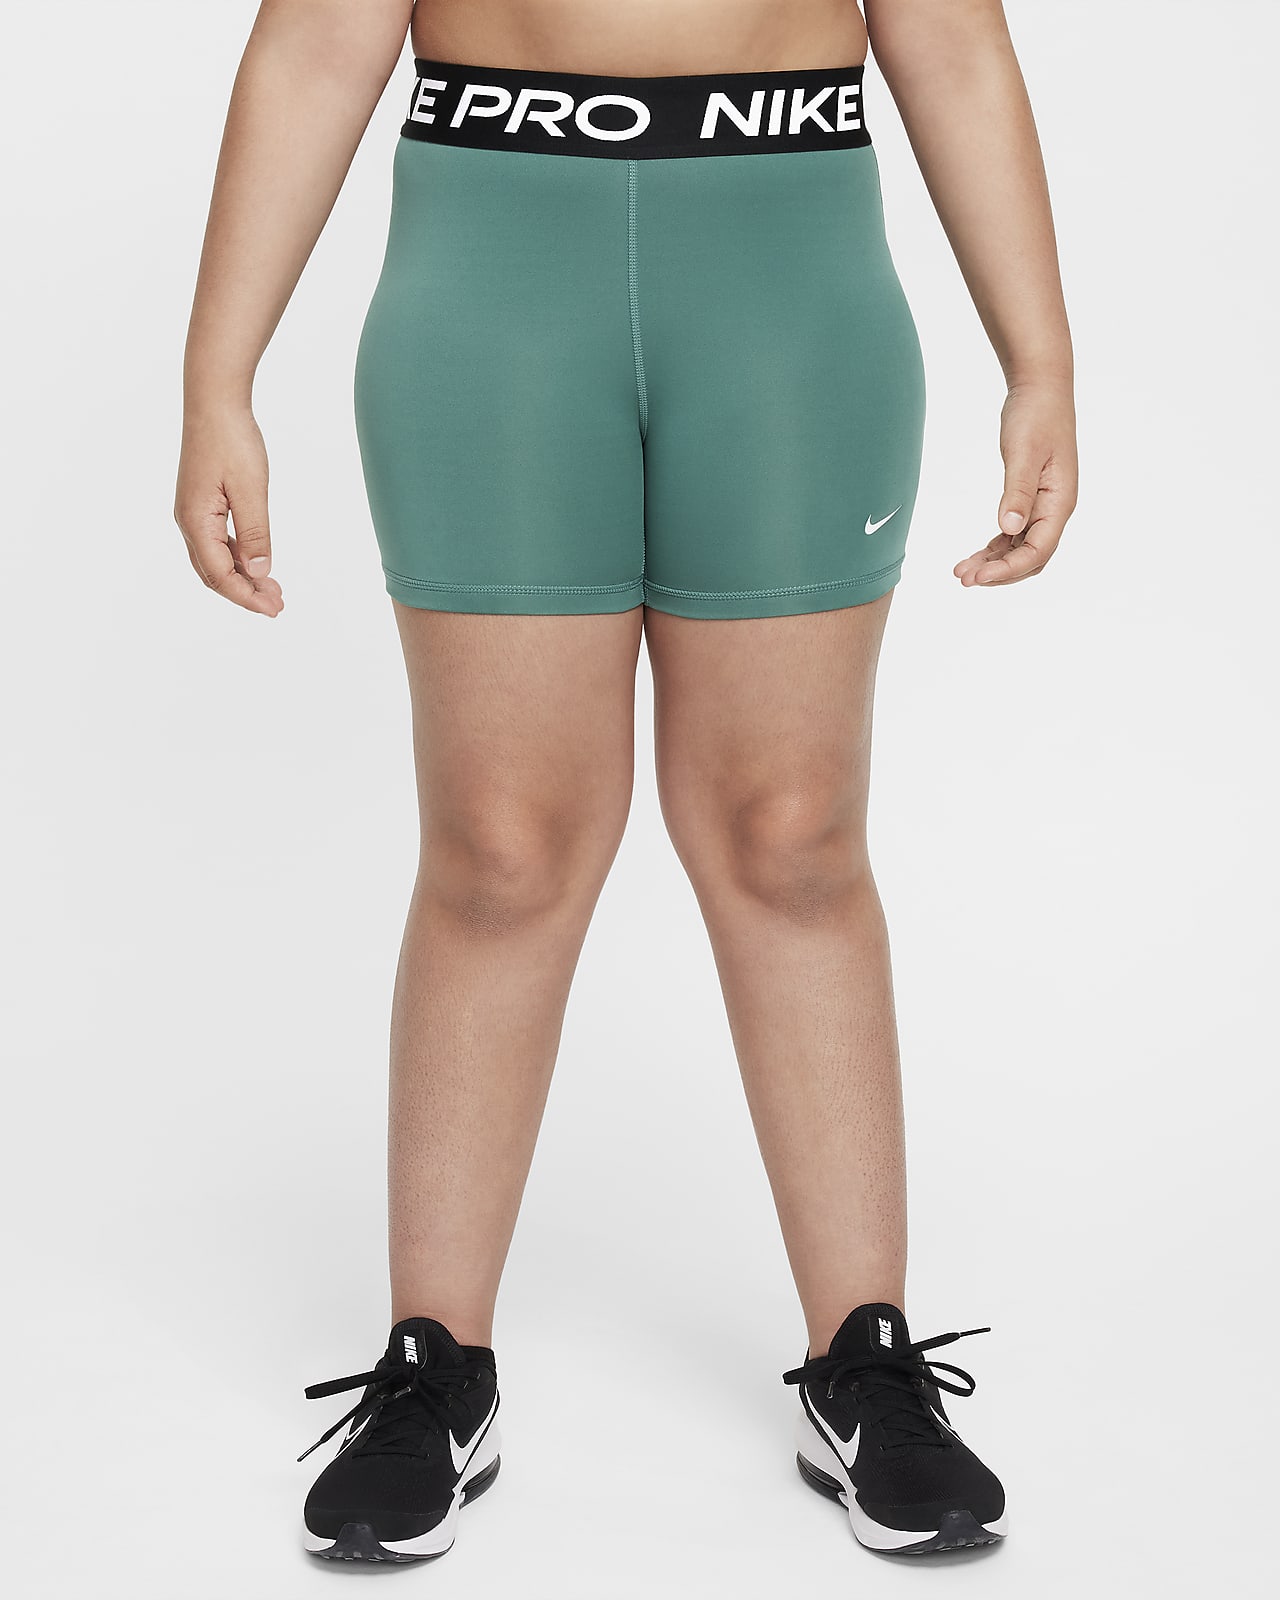 Shorts para niñas talla grande Nike Pro Dri-FIT (talla amplia)